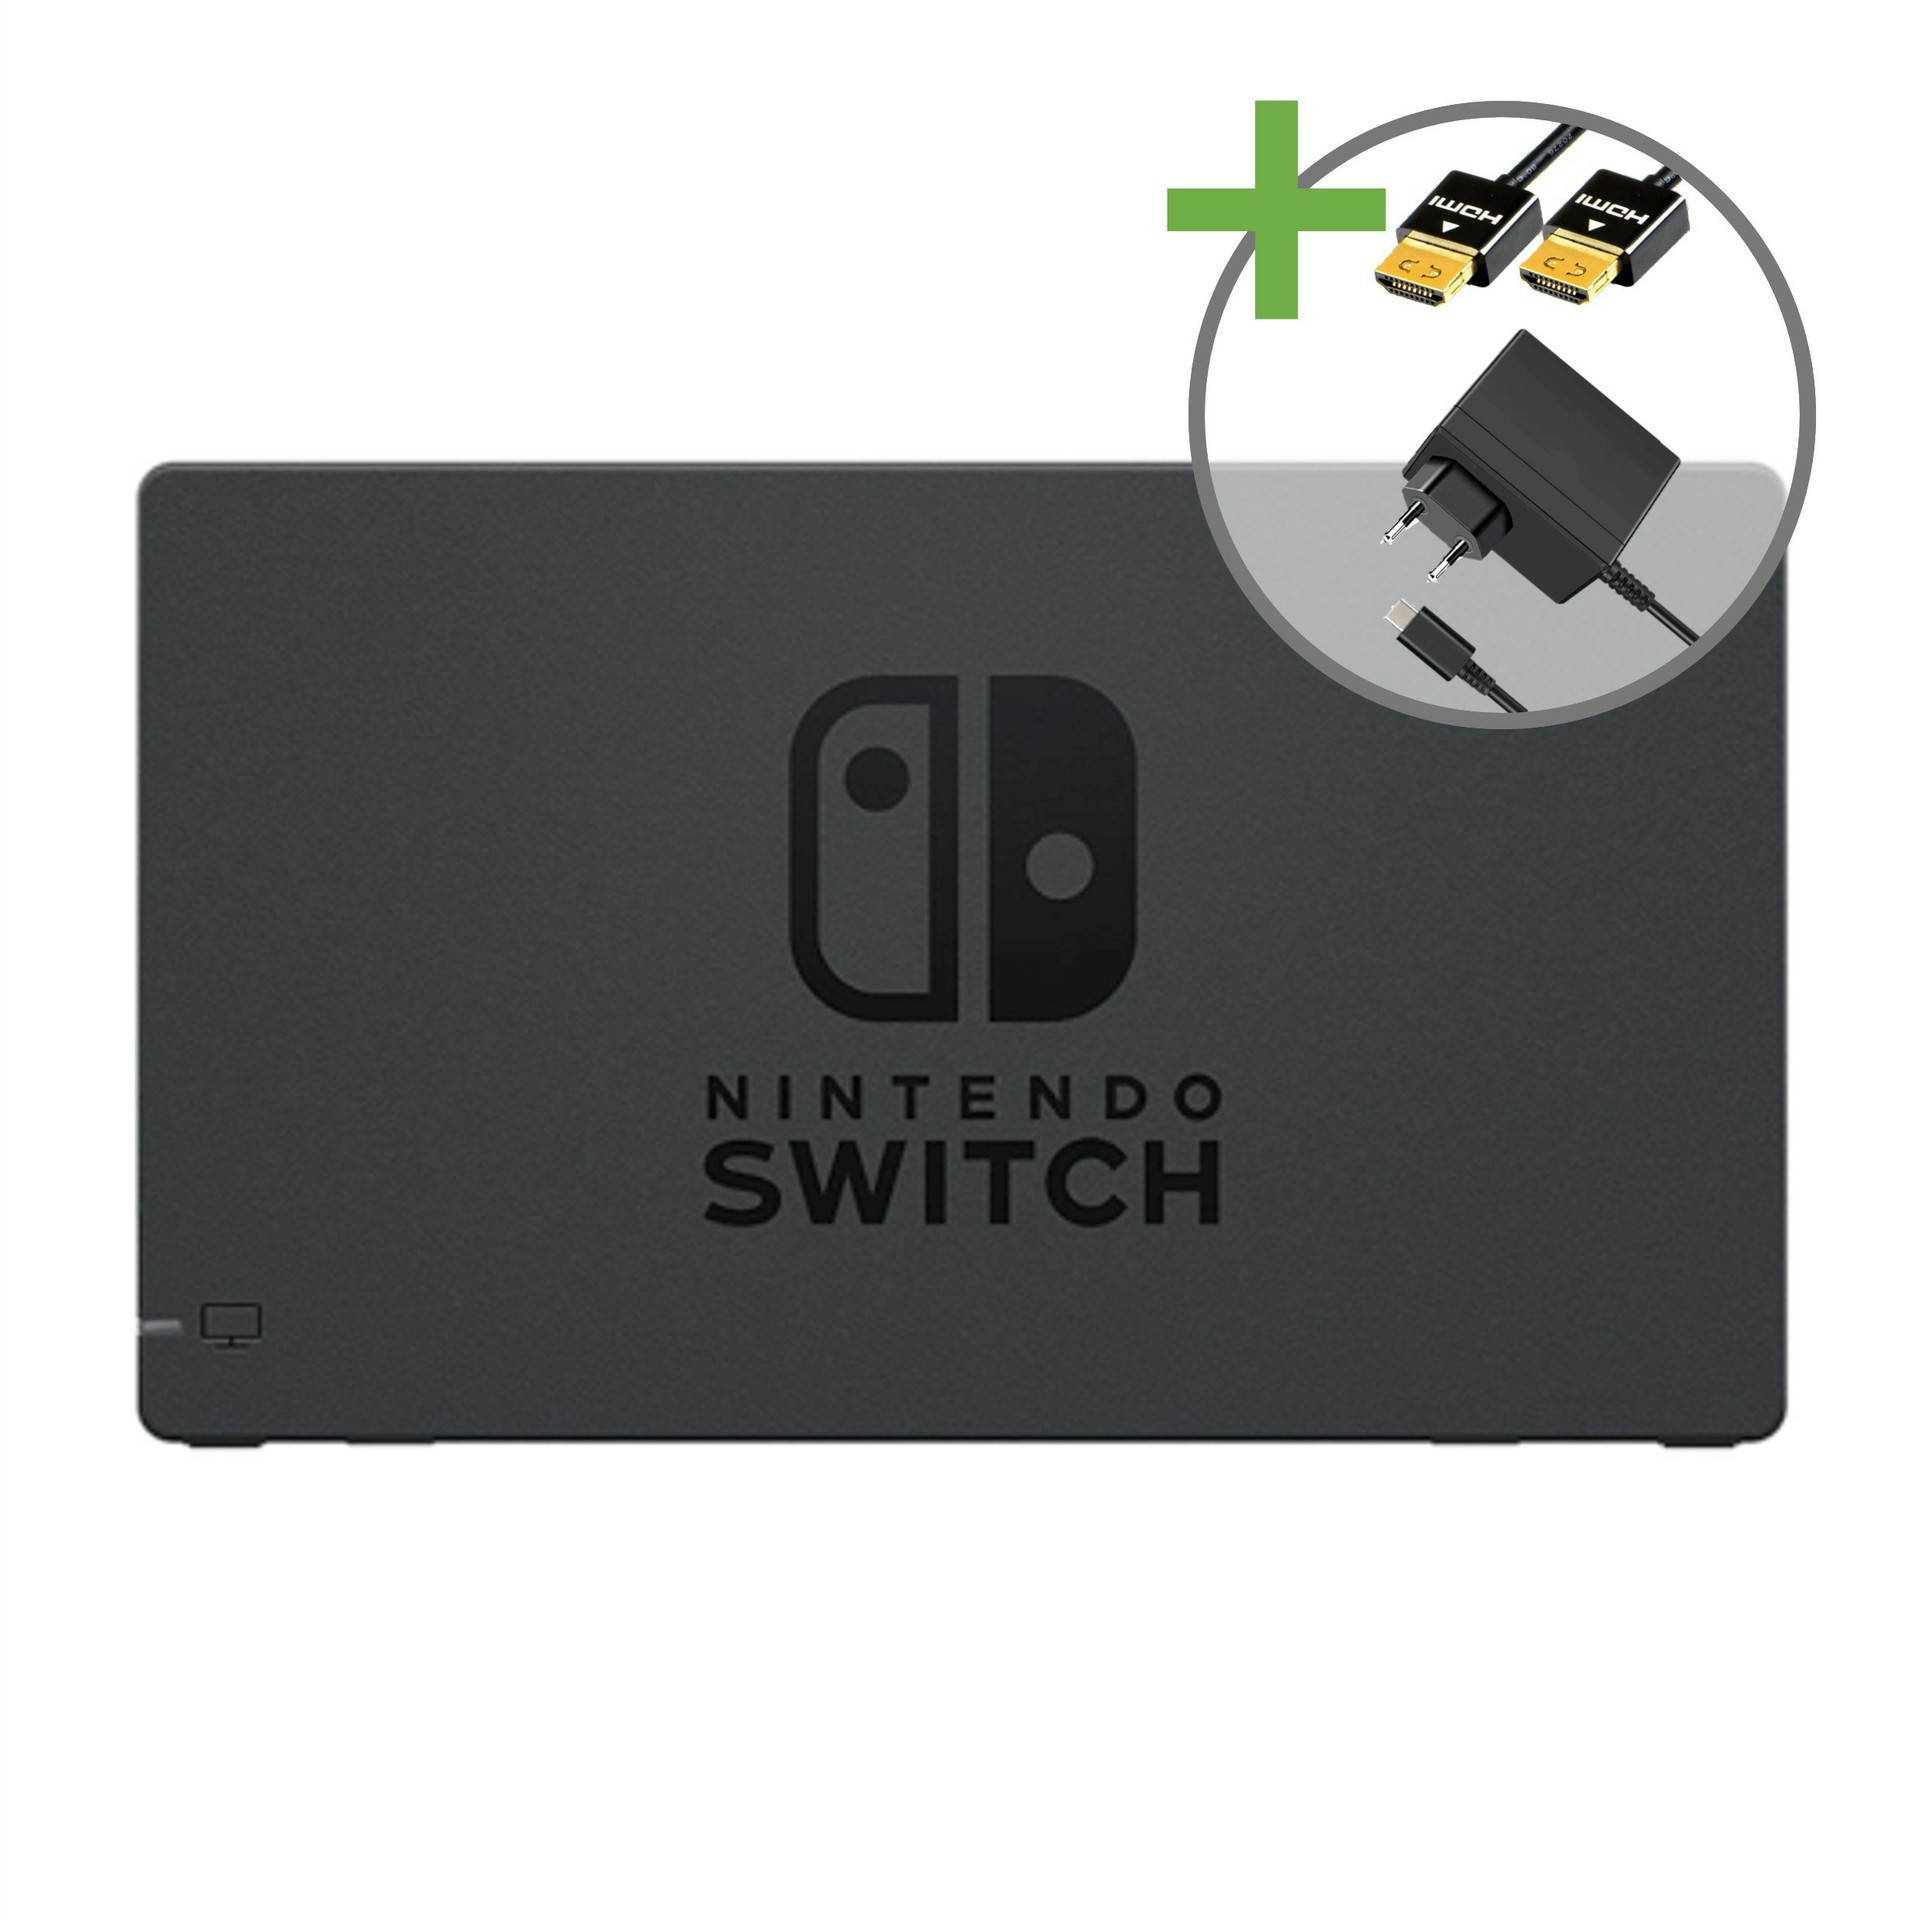 Nintendo Switch Dock - Nintendo Switch Hardware